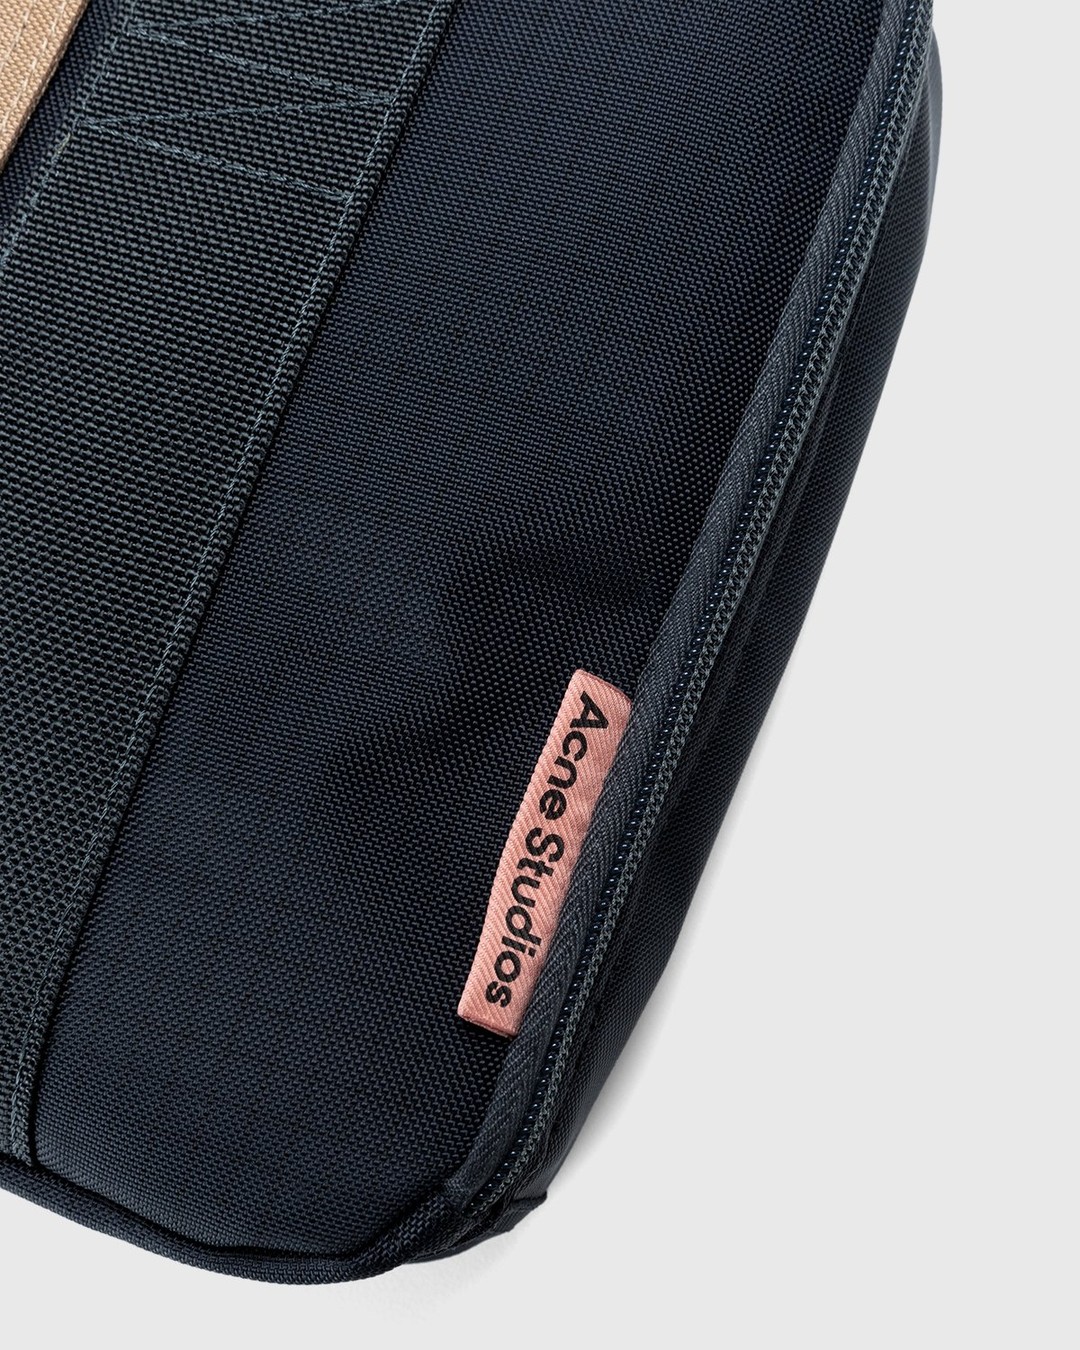 Acne Studios – Nylon Crossbody Laptop Bag Black/Khaki Green - Bags - Black - Image 4